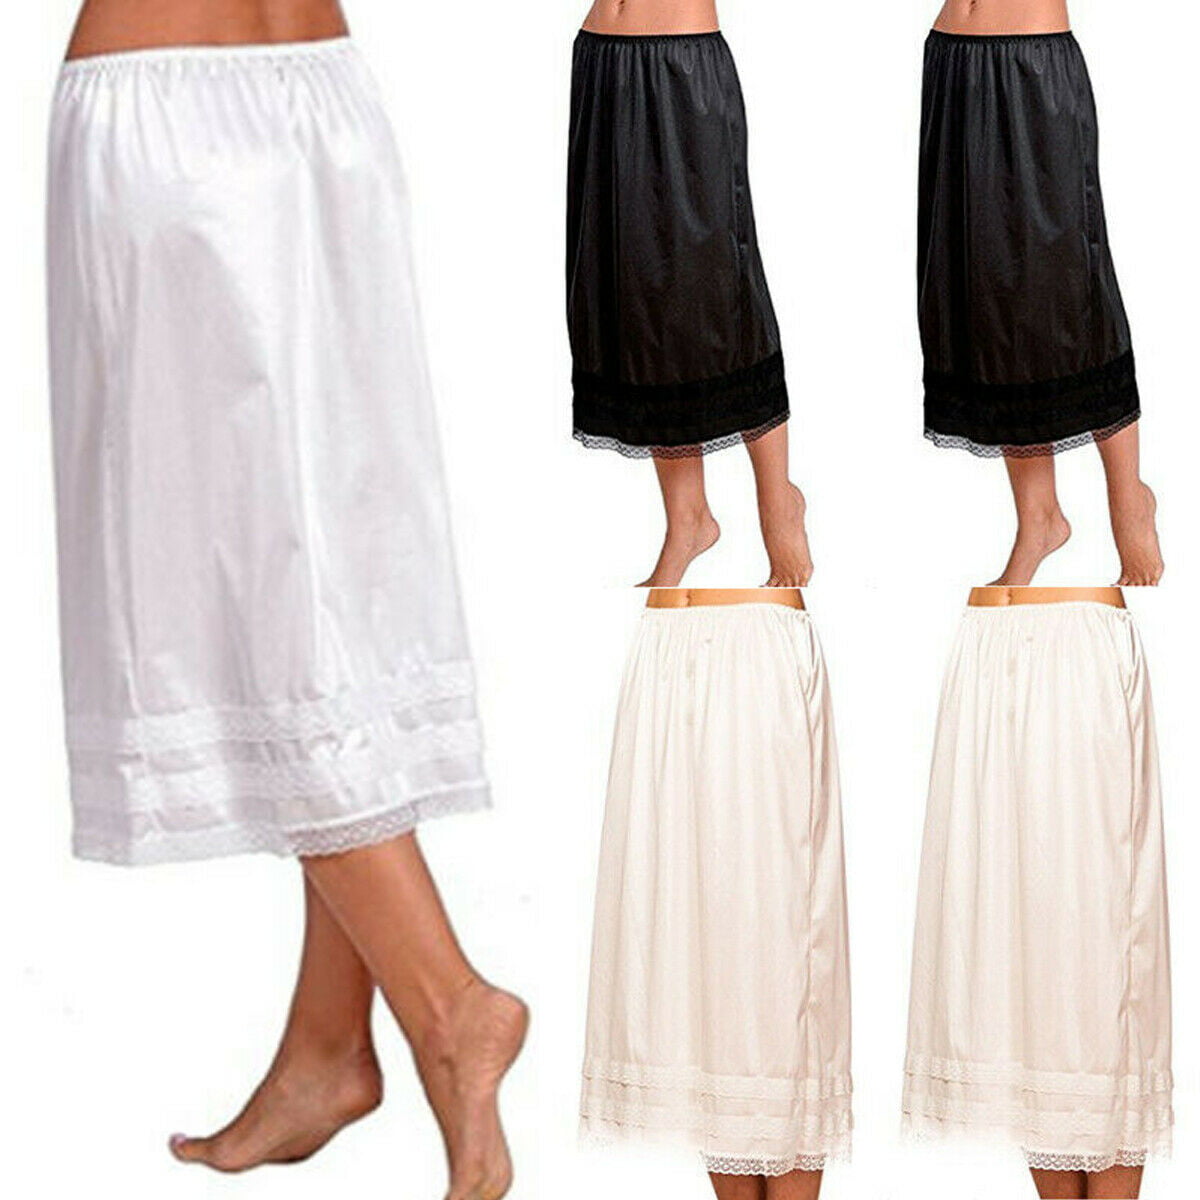 MANCYFIT Half Slip for Women Under Dresses Full Length Long Under Skirt with Lace 36 